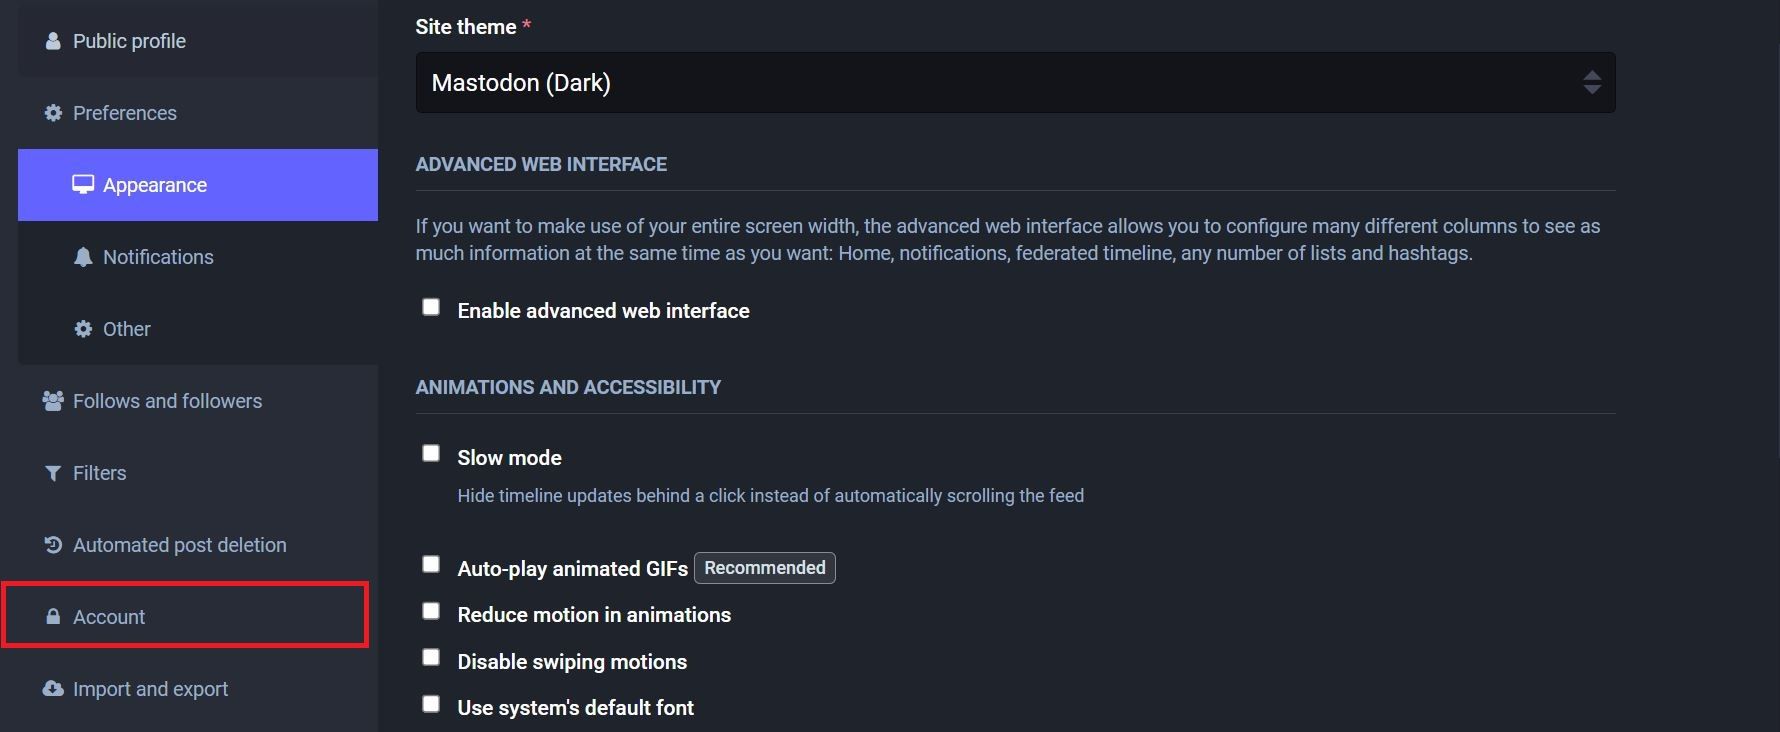 screenshot of mastodon preferences page on desktop